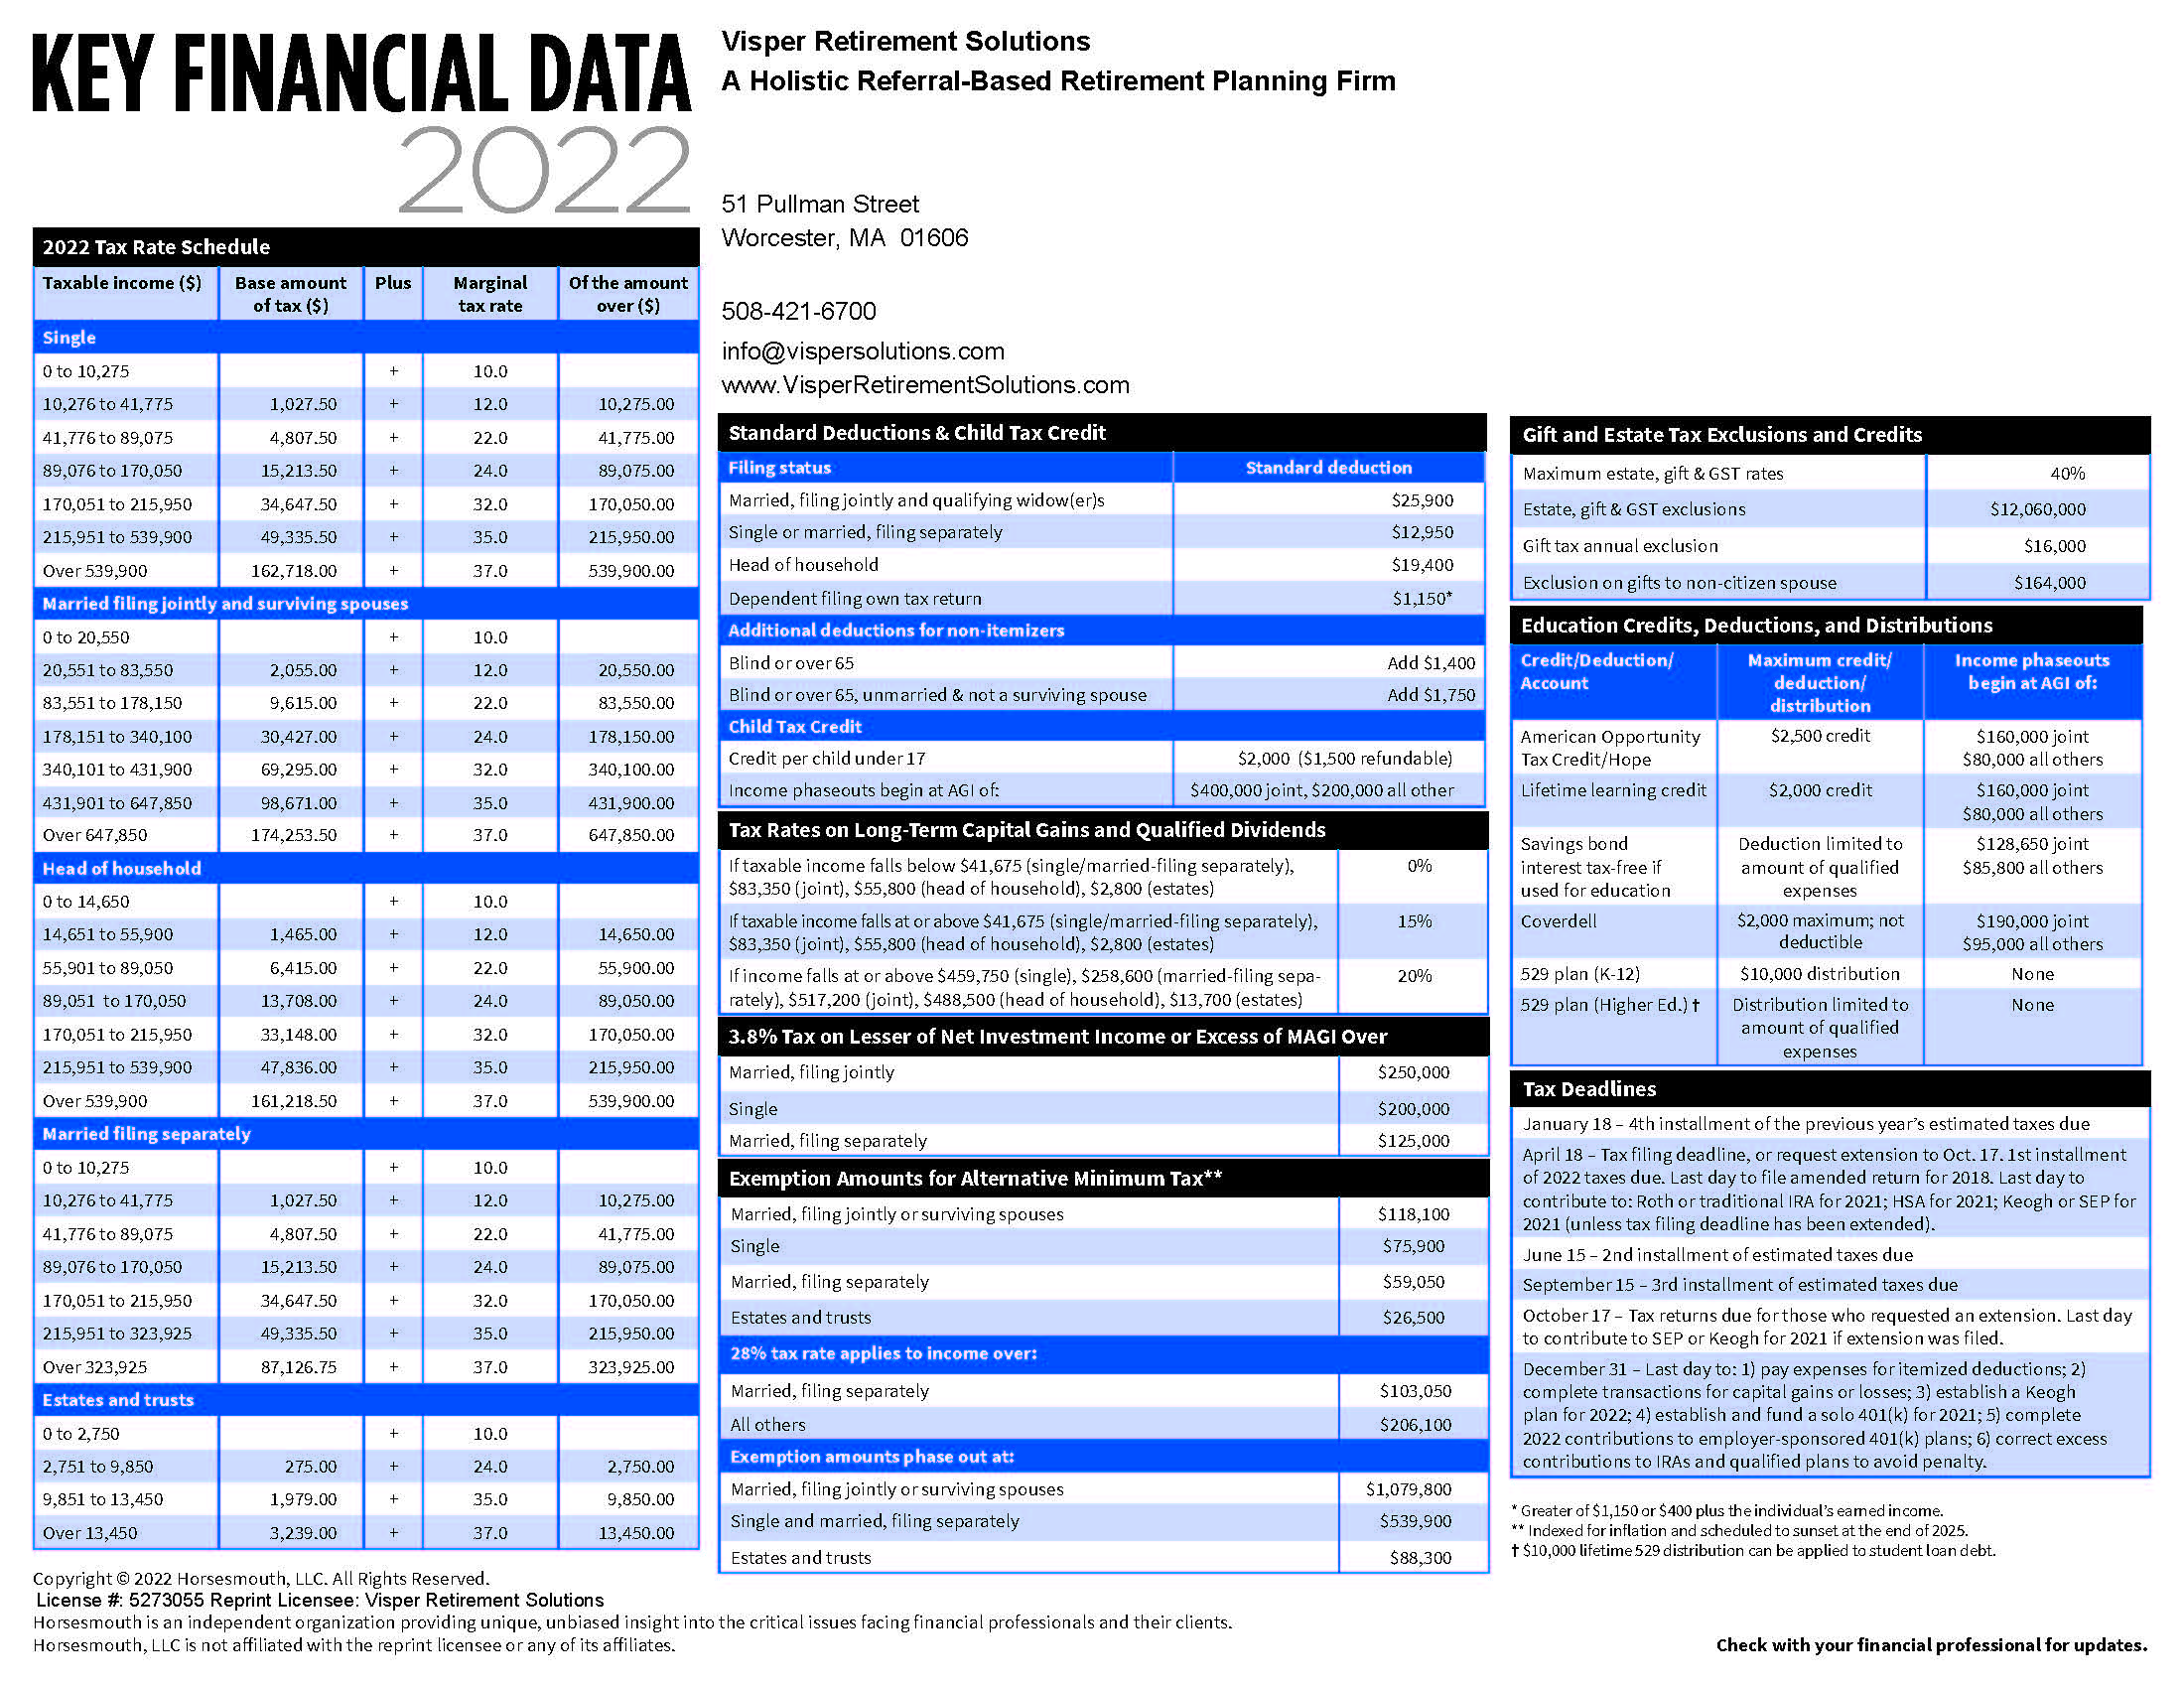 Key Financial Data Sheet 2022_Page_1